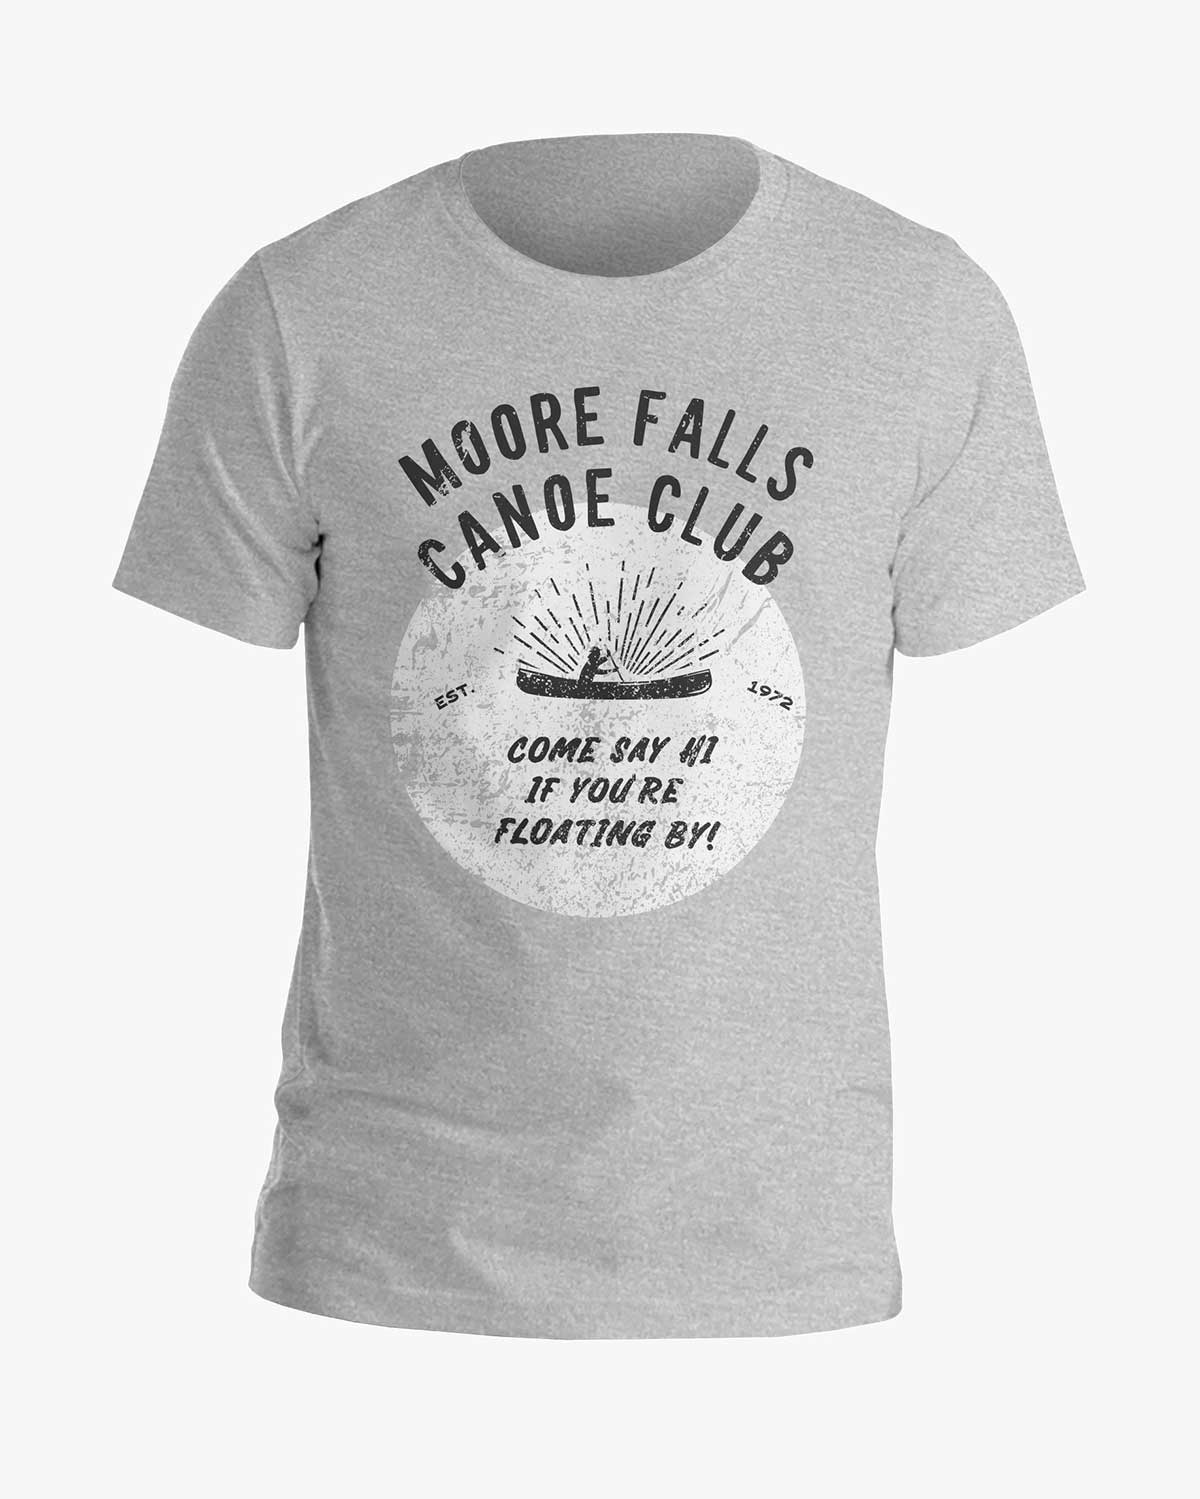 Canoe Club - Moore Falls - Tee